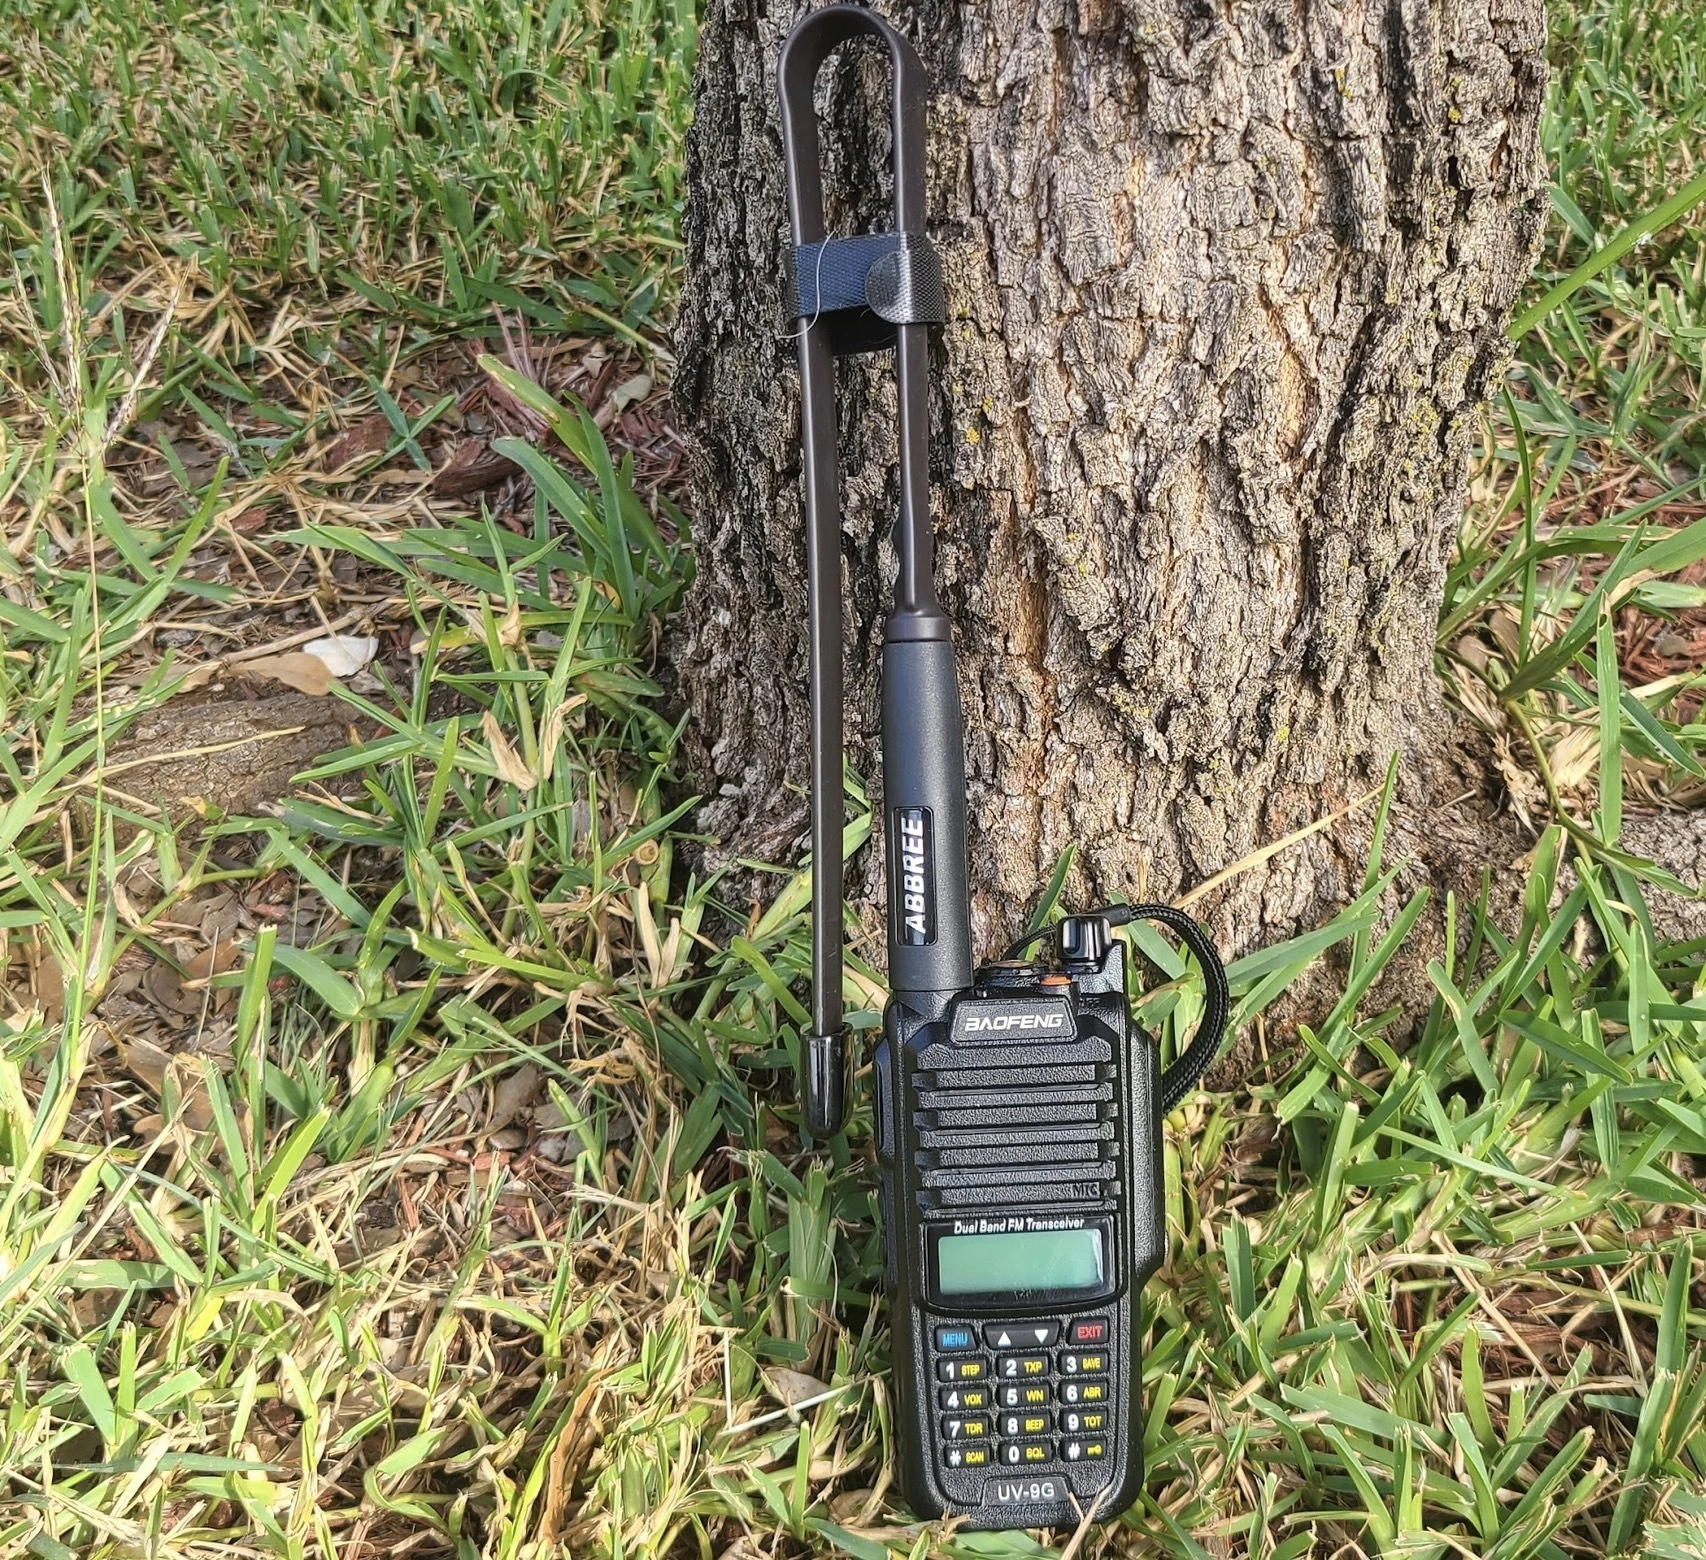 Best prepper walkie talkie Top features to look for in a prepper walkie talkie